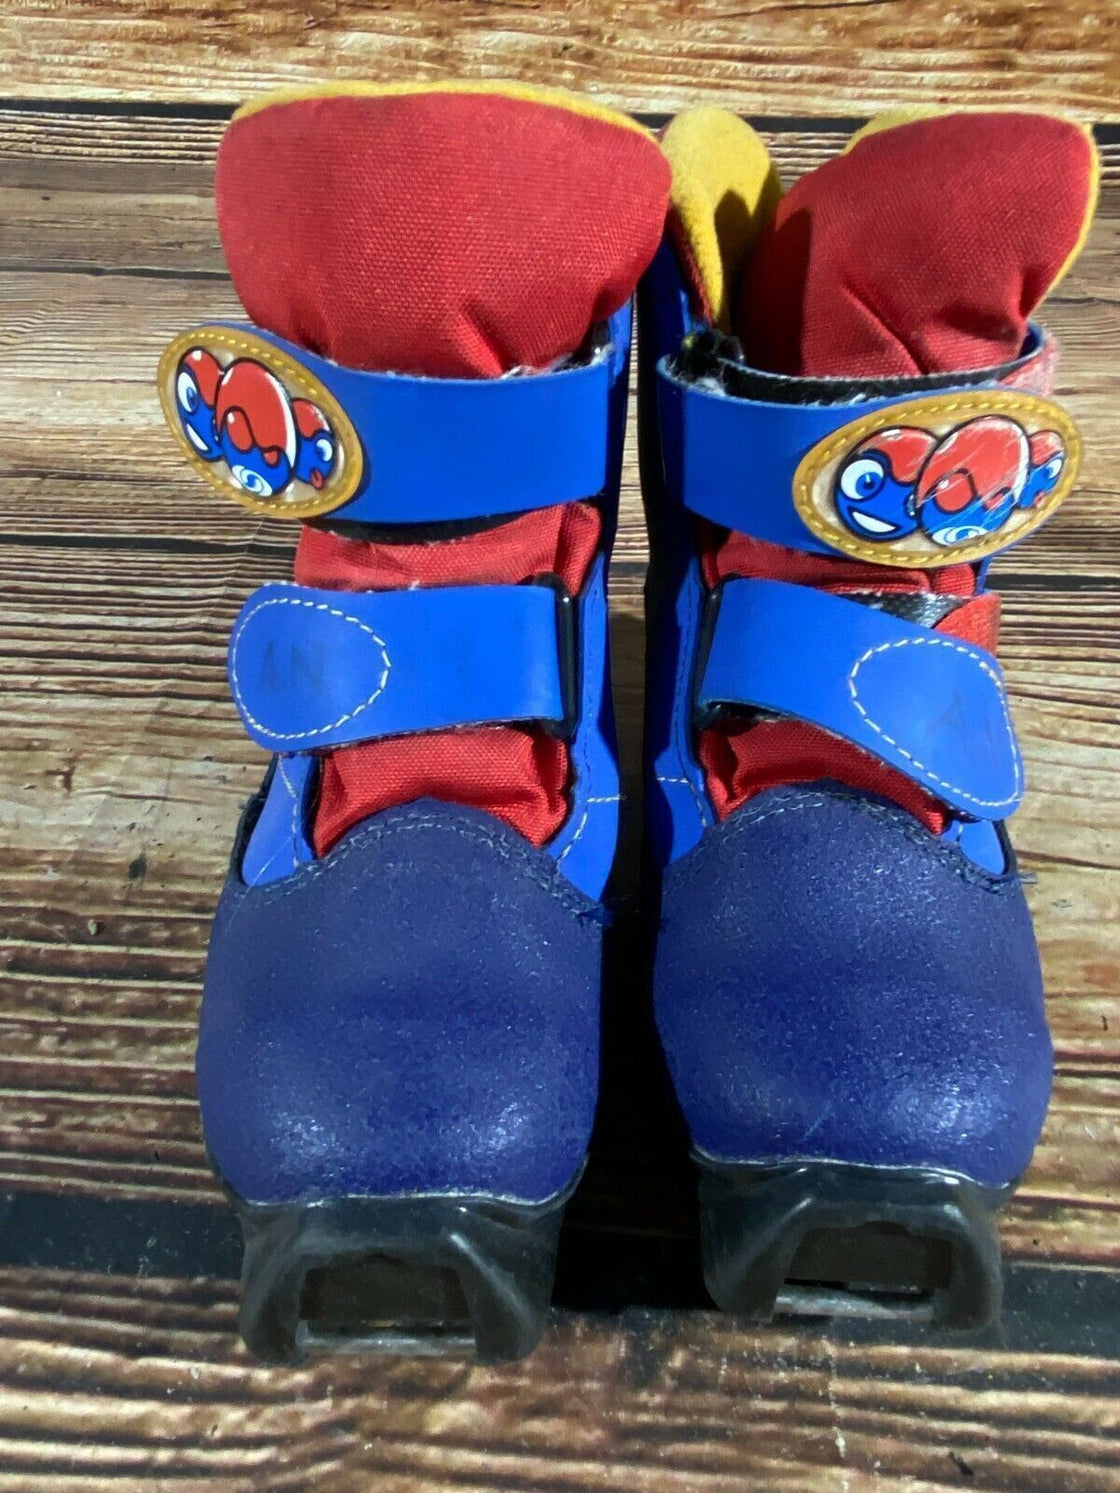 SALOMON Kids Nordic Cross Country Ski Boots Size EU31 US13 SNS S-2